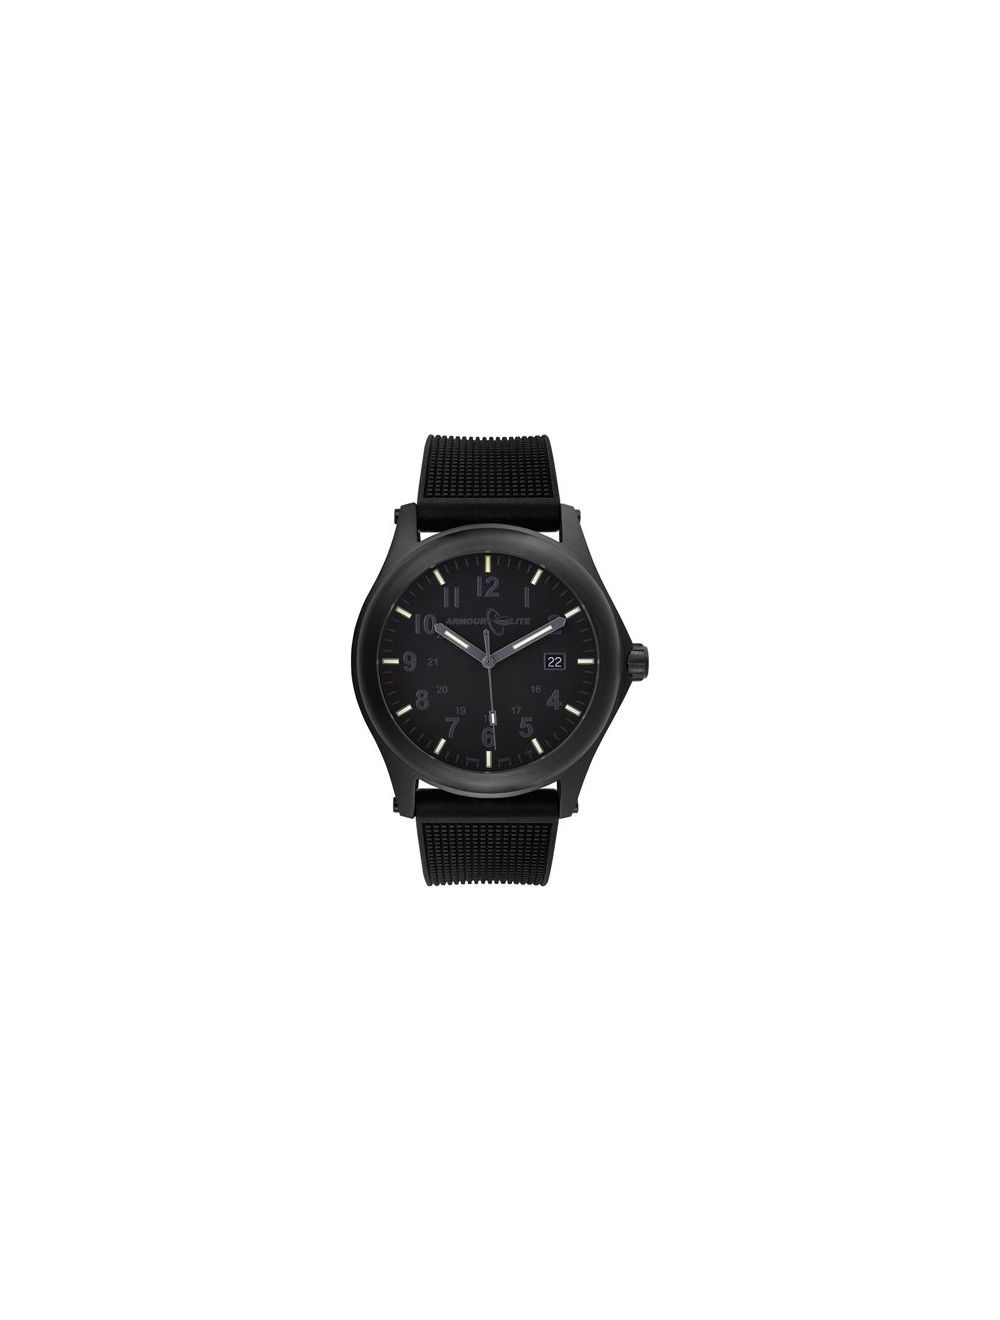 ArmourLite Stealth Black Swiss Tritium Illuminated Watch